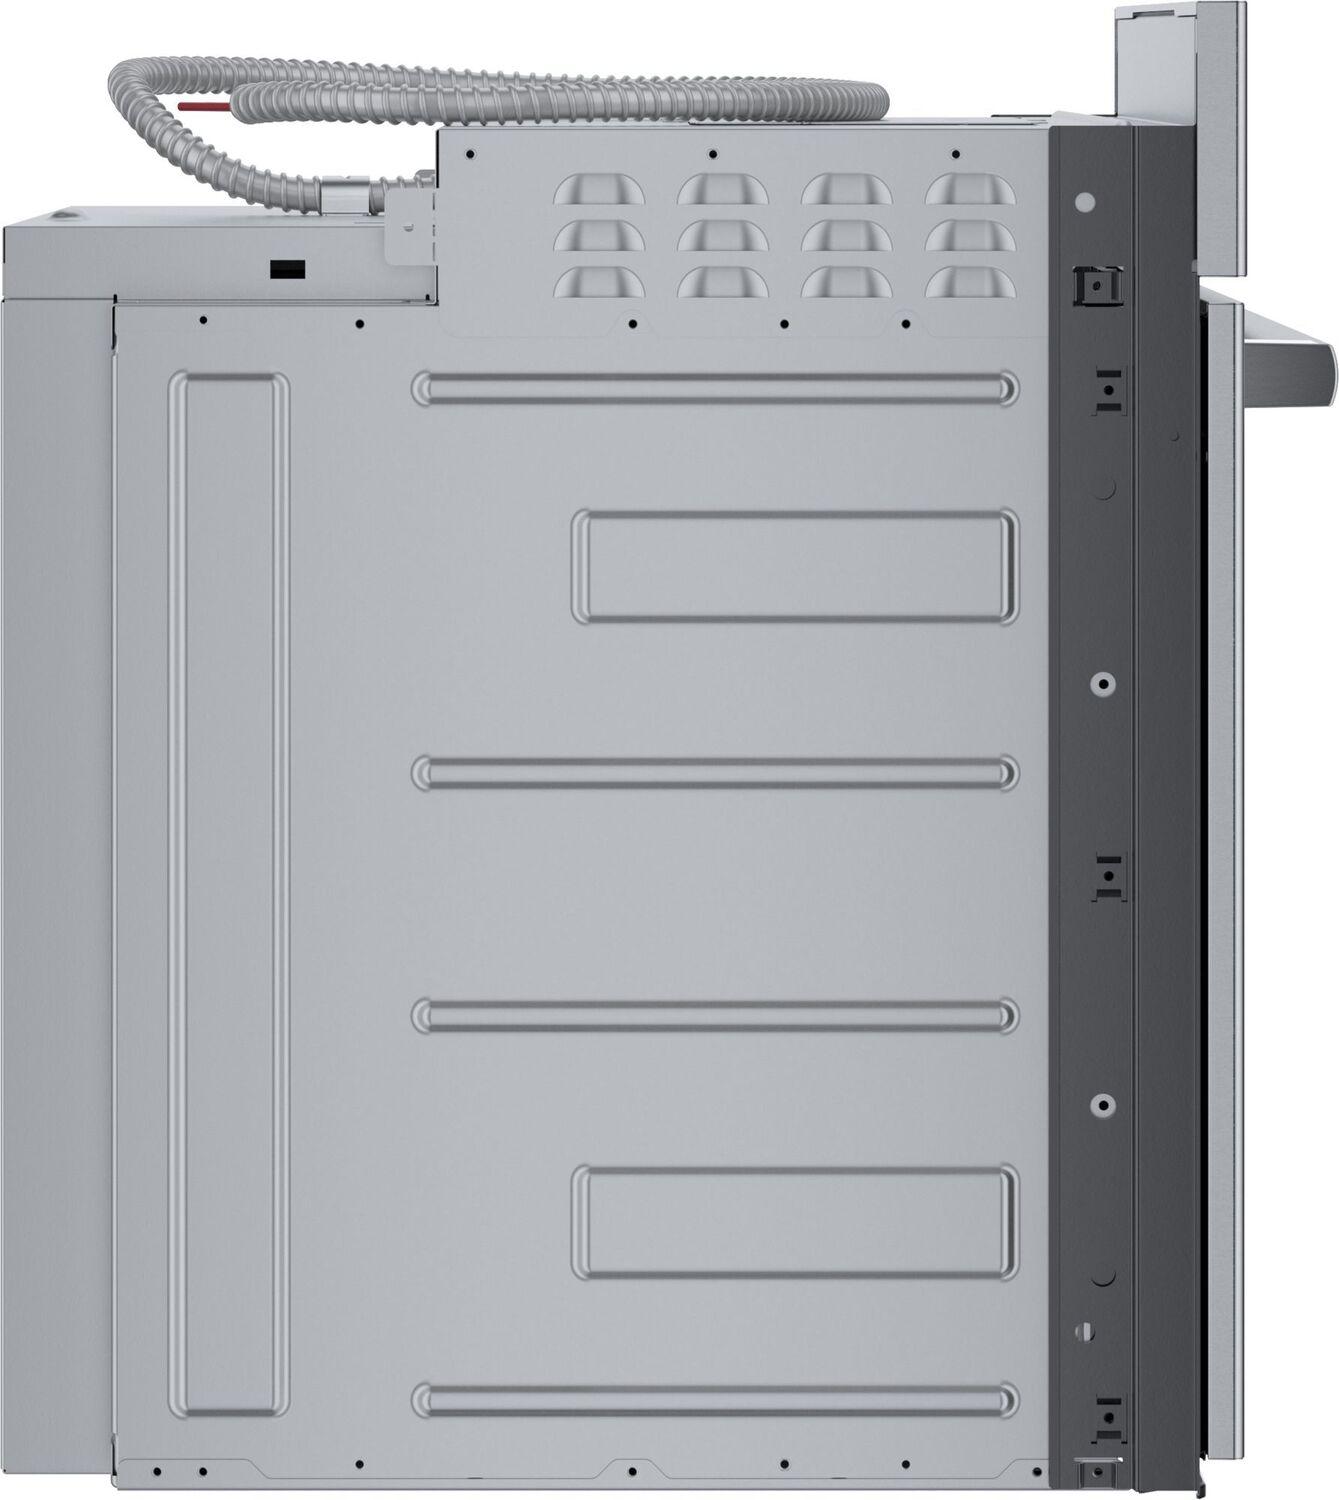 Bosch HBL8454UC 800 Series Single Wall Oven 30'' Stainless Steel Hbl8454Uc